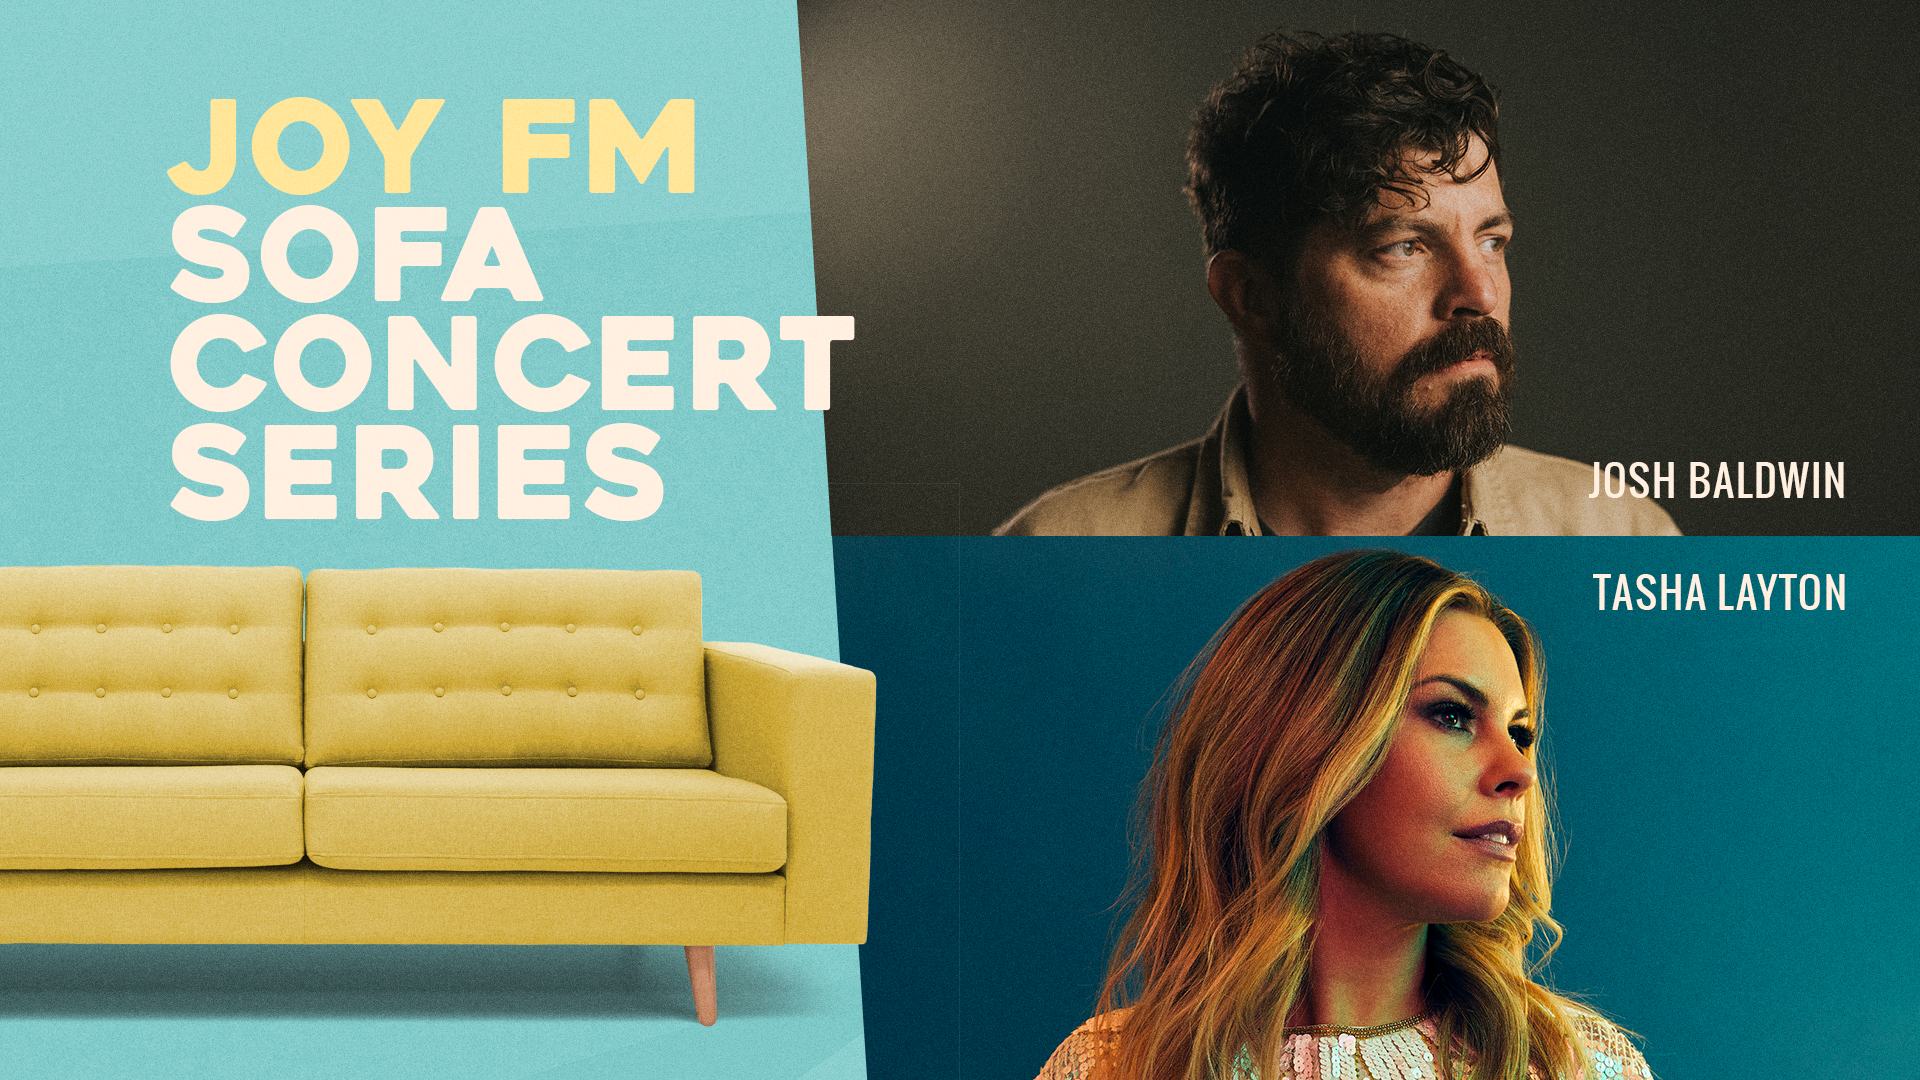 JOY FM Sofa Concert Series with Josh Baldwin & Tasha Layton